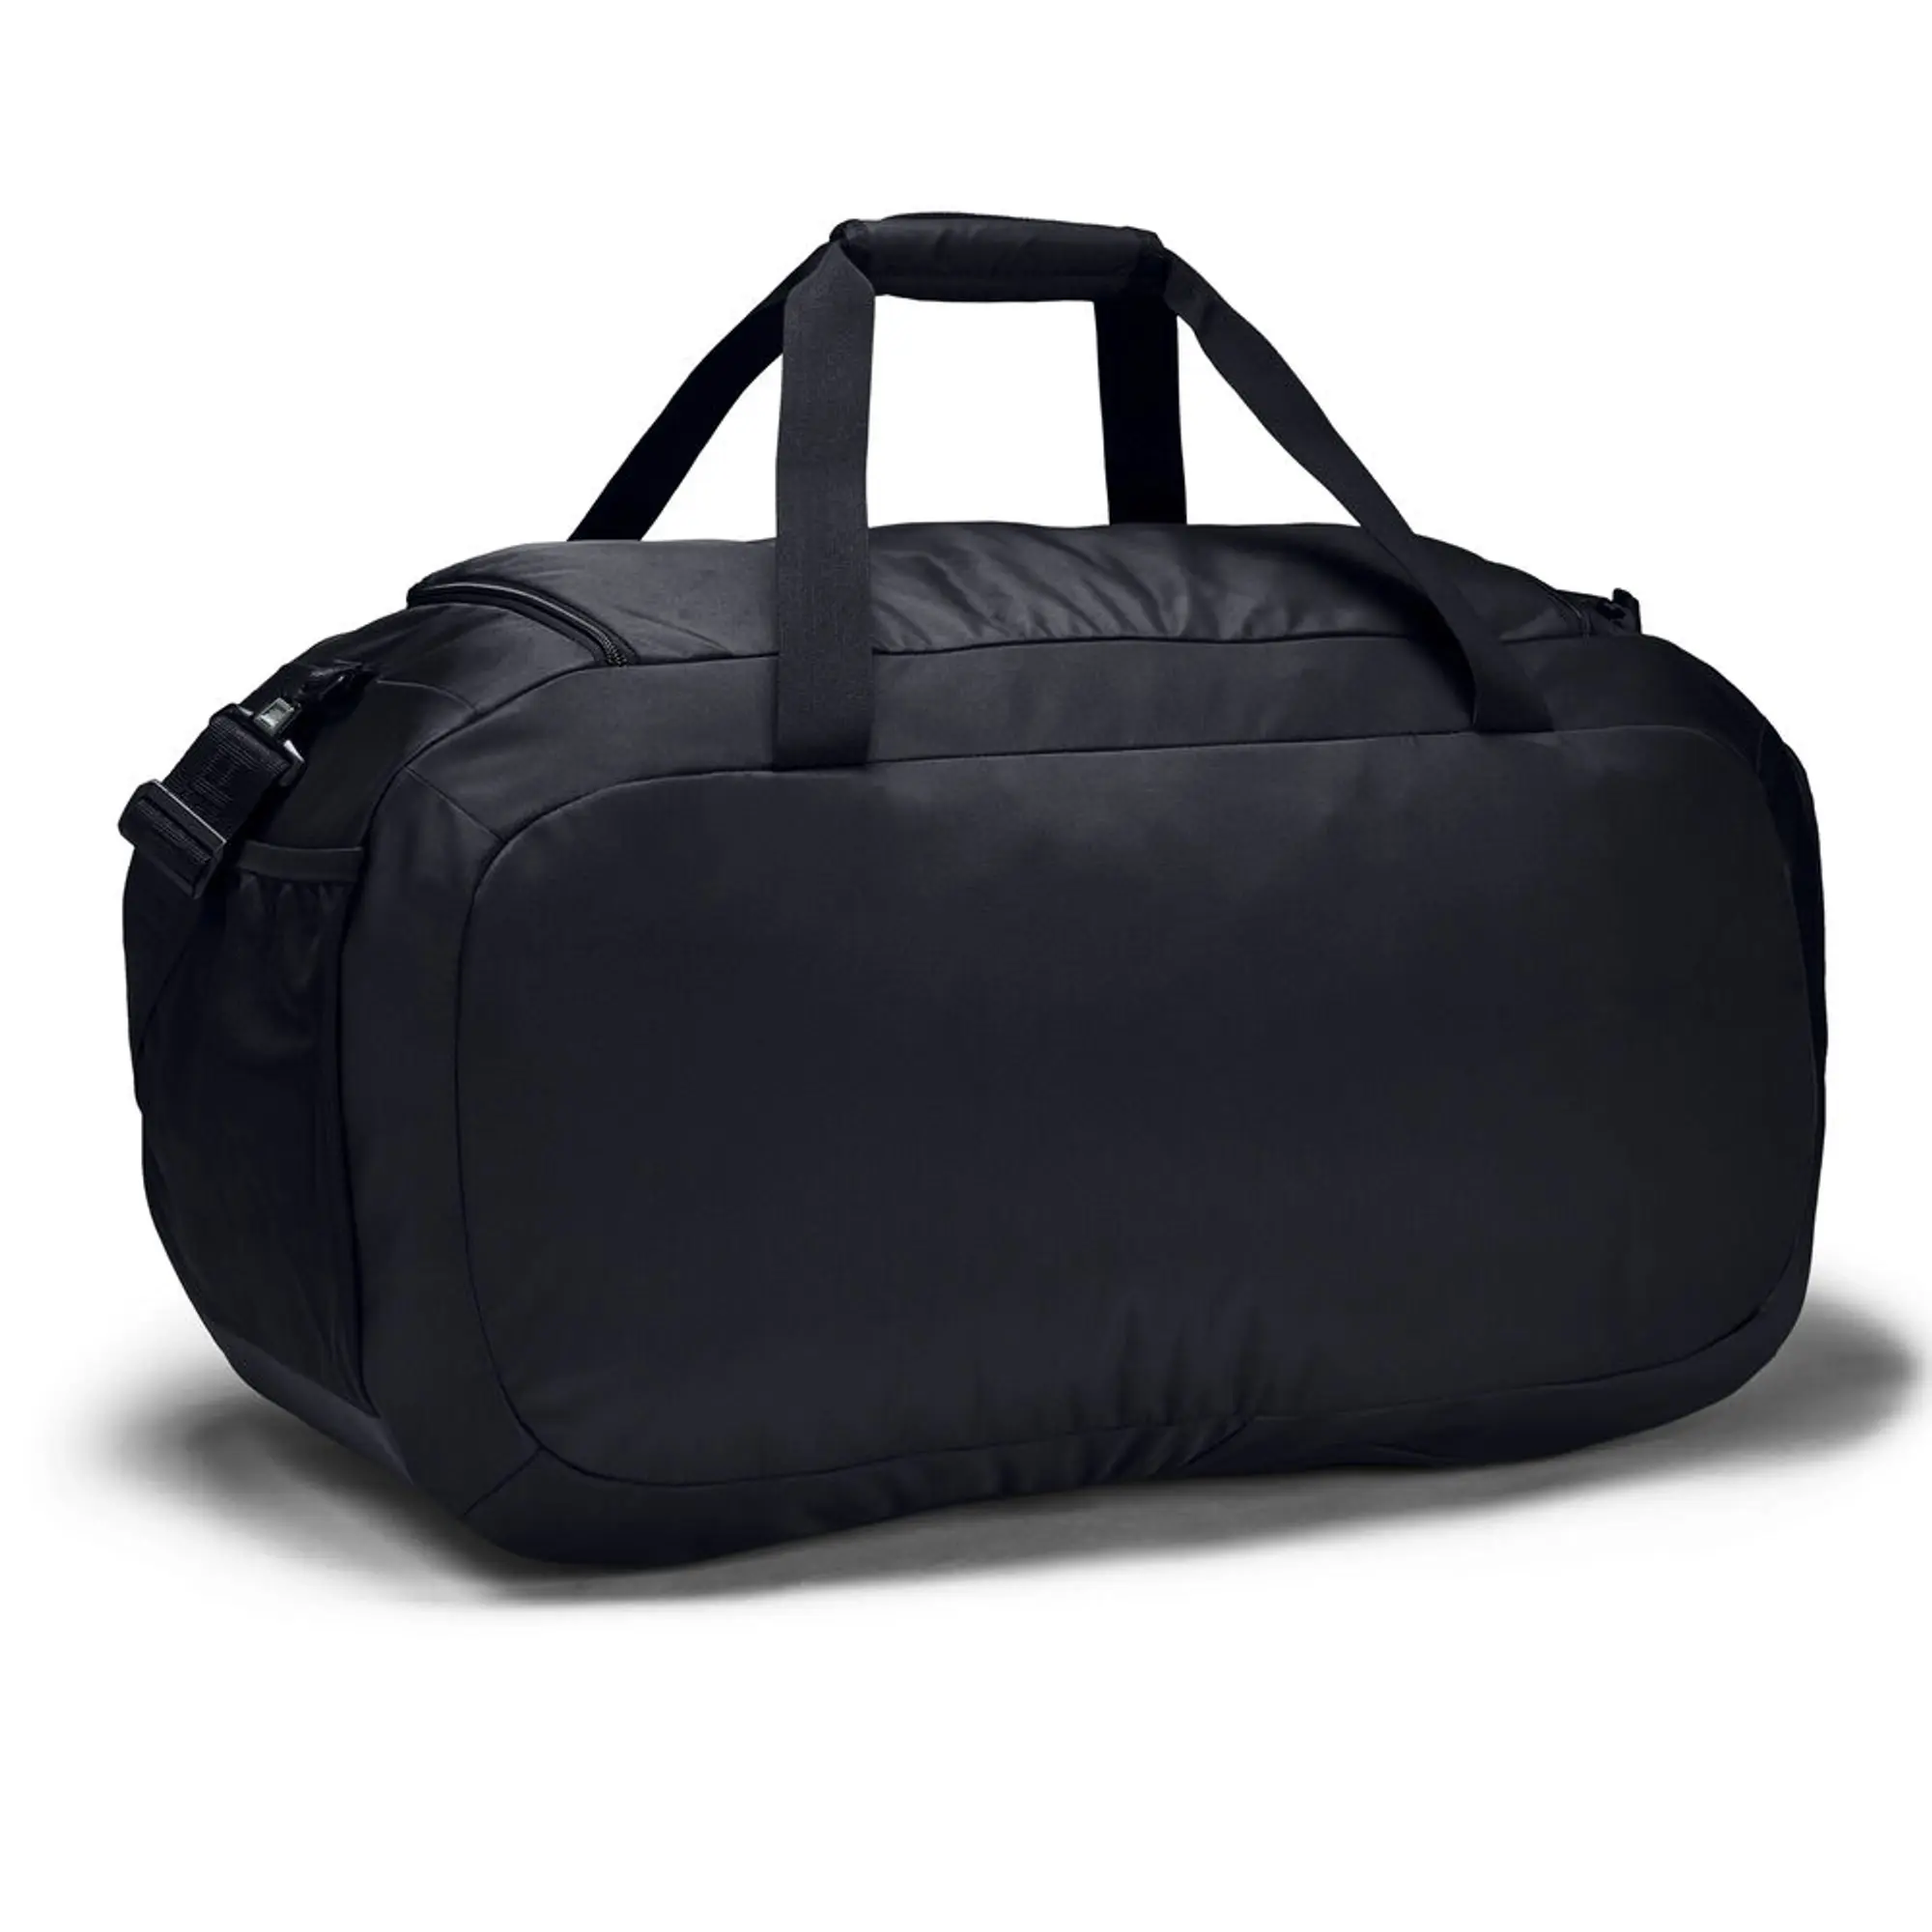 Under Armour Unisex Undeniable 4.0 Mens Black Large Duffle Bag - One Size